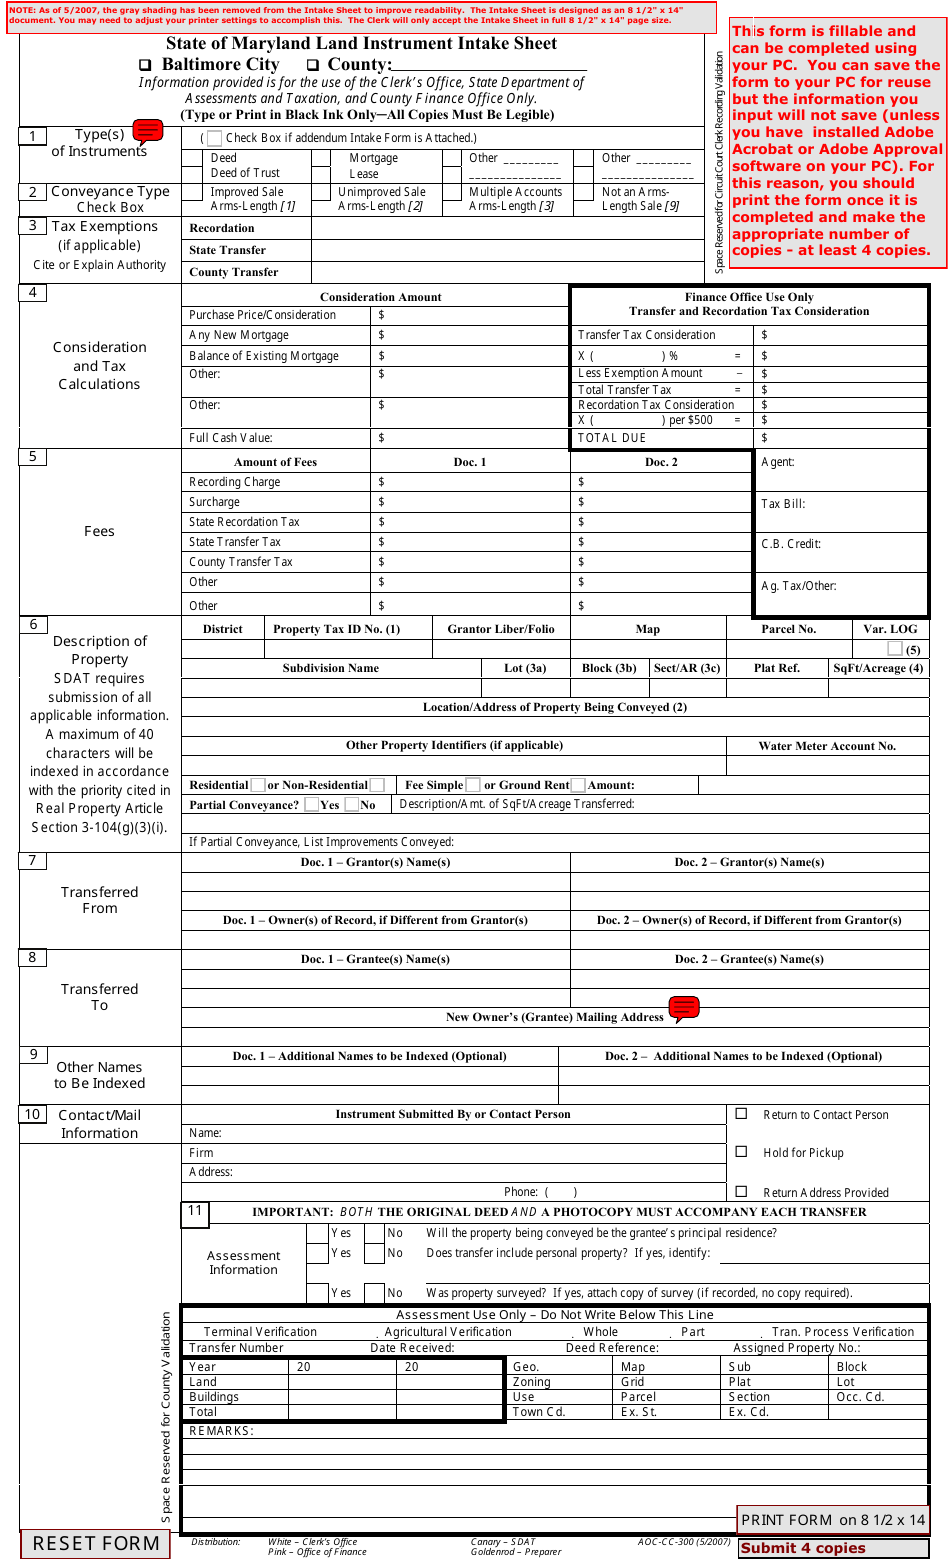 Form AOC-CC-300 State of Maryland Land Instrument Intake Sheet - Maryland, Page 1